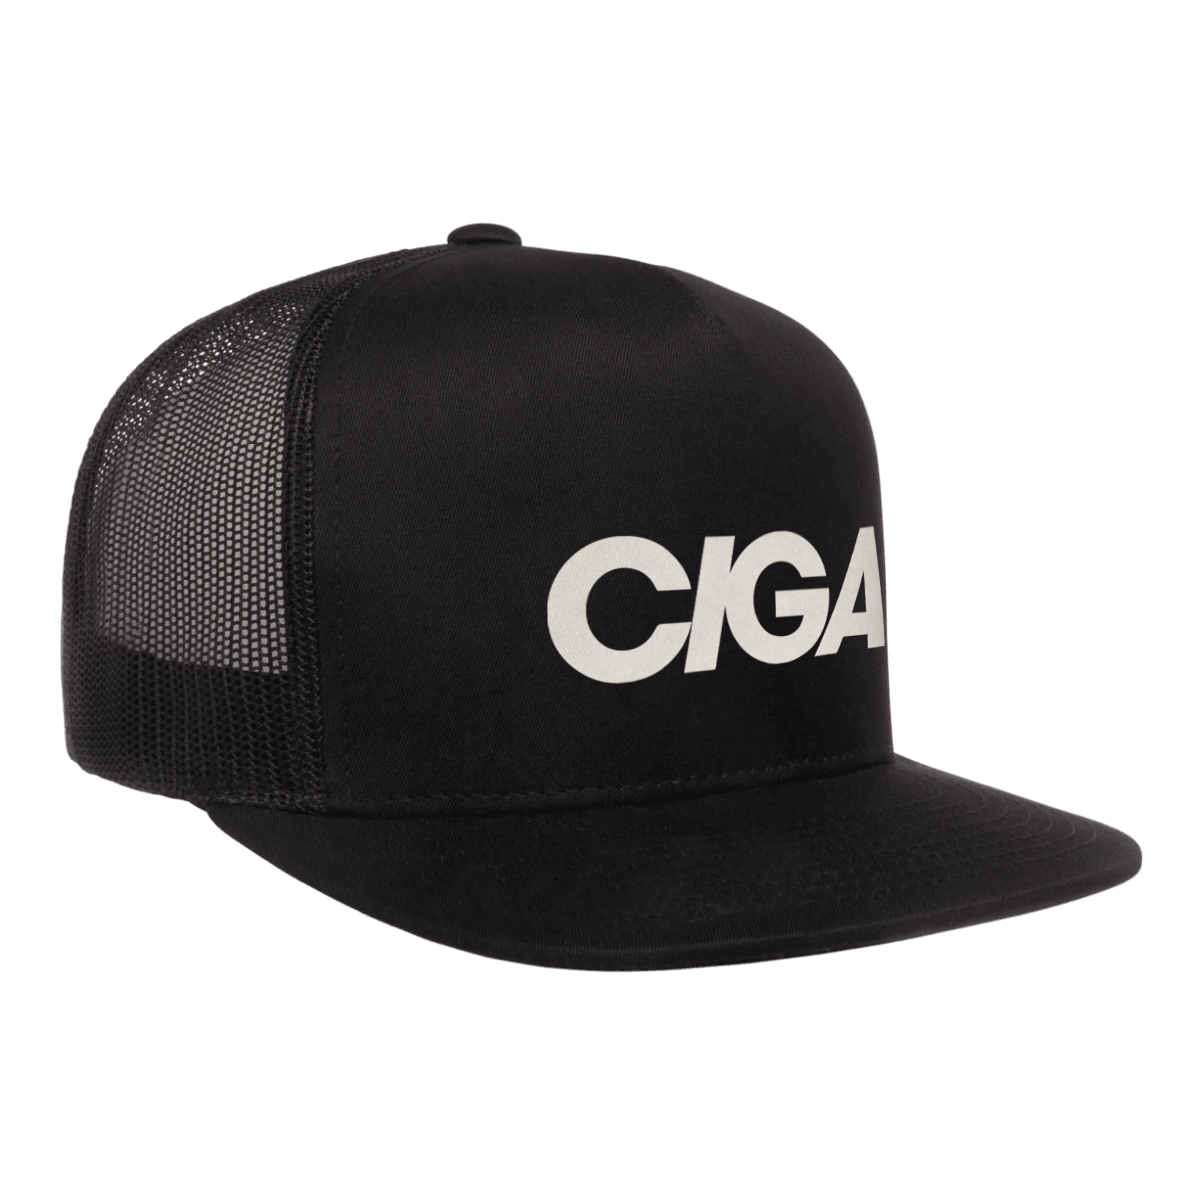 CIGAR - "Logo" (Cap)